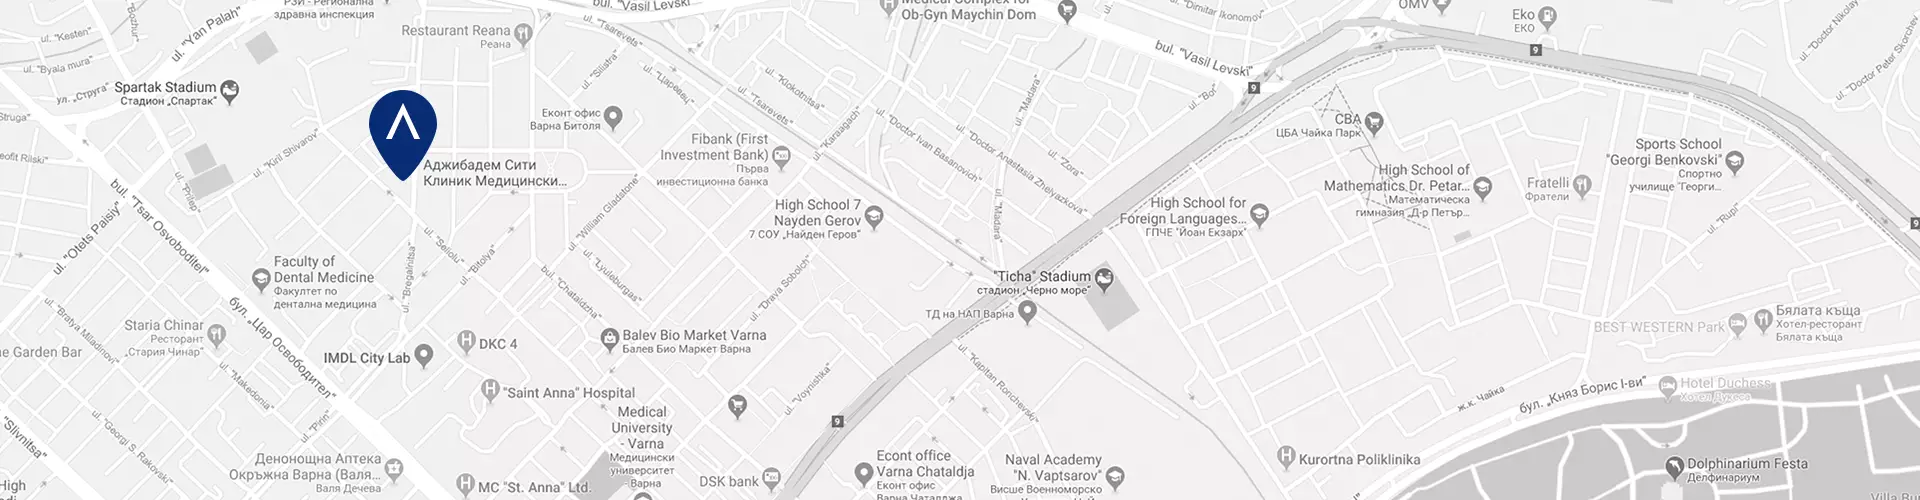 acibadem-city-clinic-medical-center-varna-google-maps-image.webp